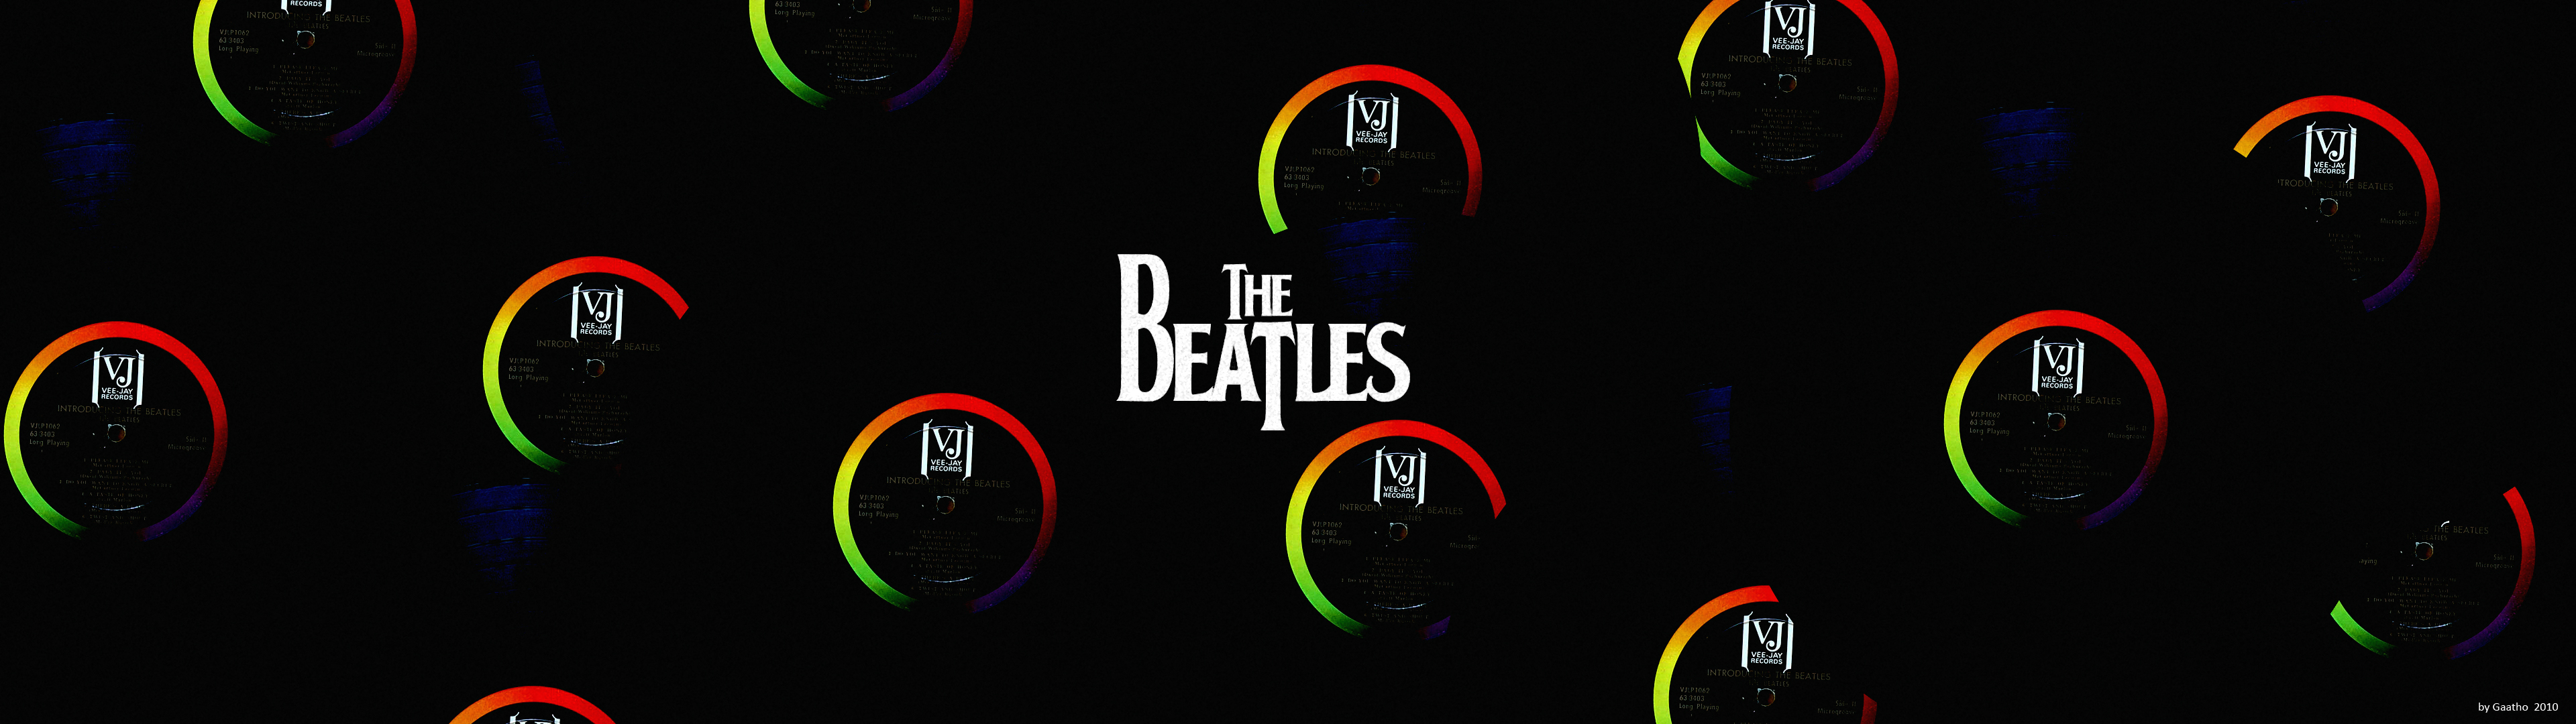 Music The Beatles 3840x1080